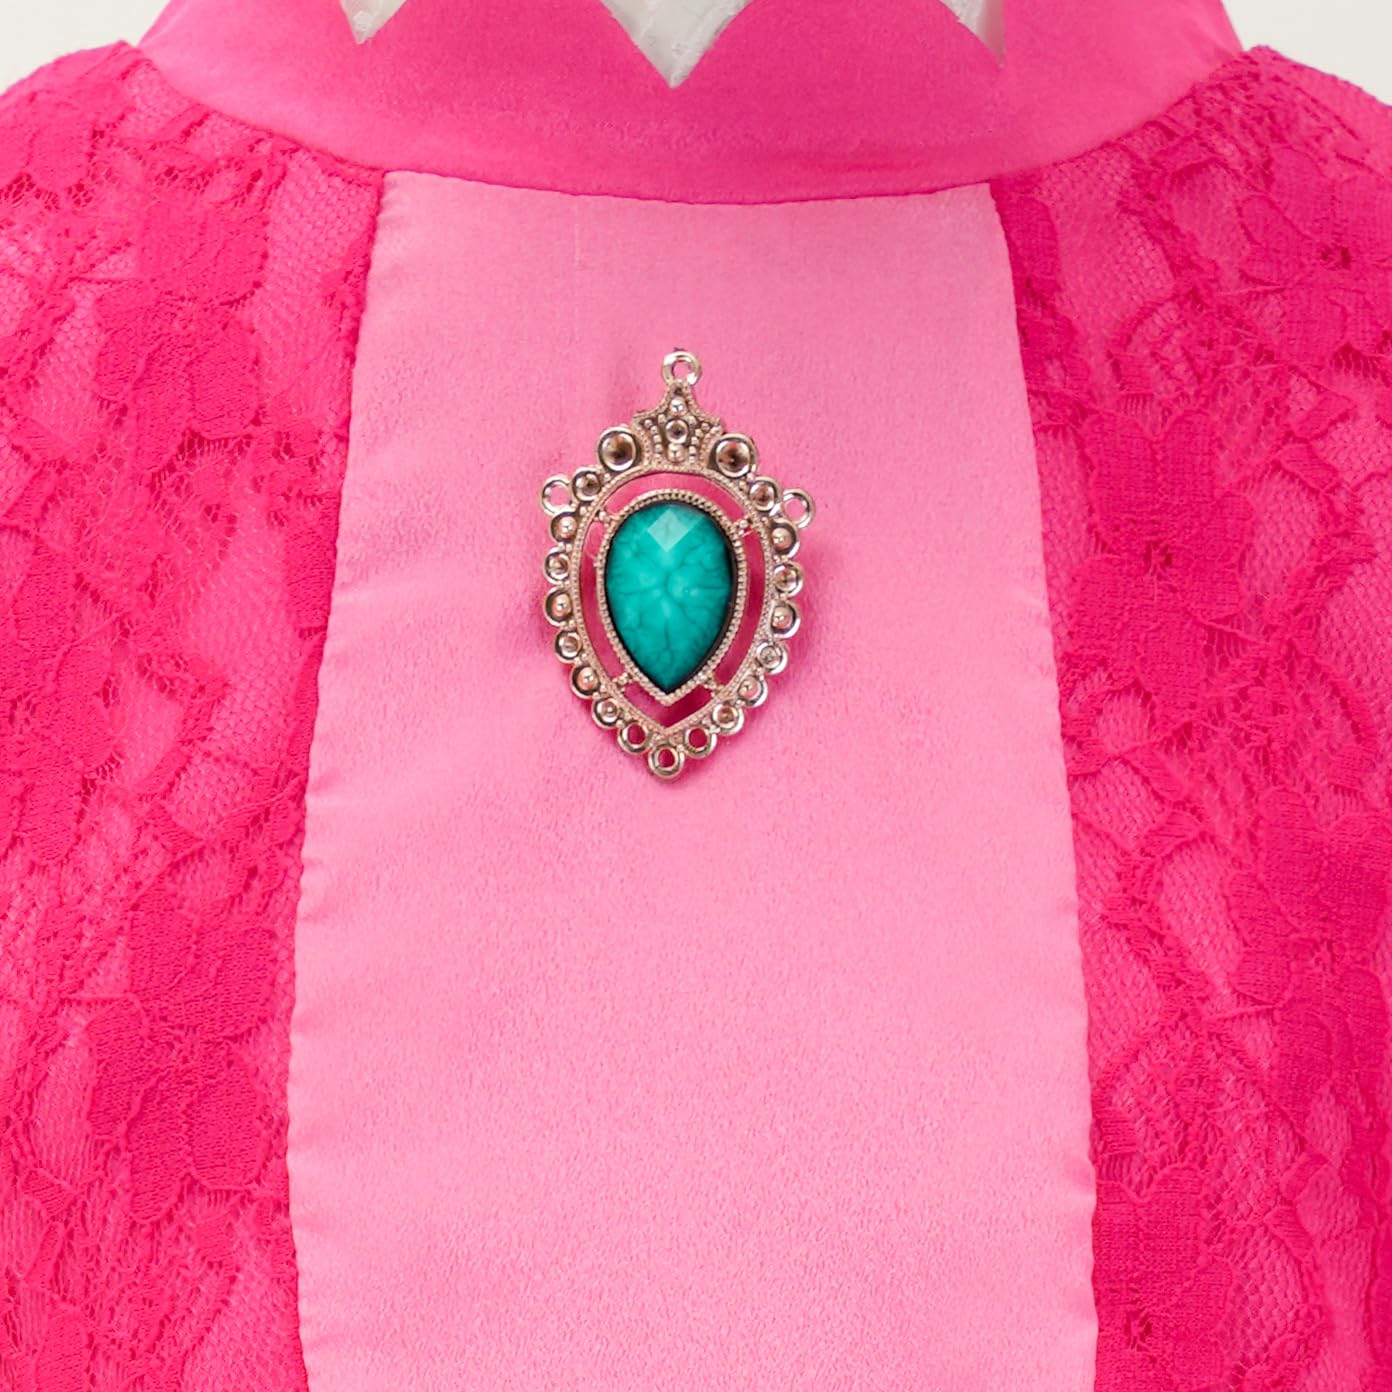 GZ-LAOPAITOU Princess Peach Costume for Girls Princess Peach Dress Birthday Dress Up Cosplay 3-12Years - image 5 of 5